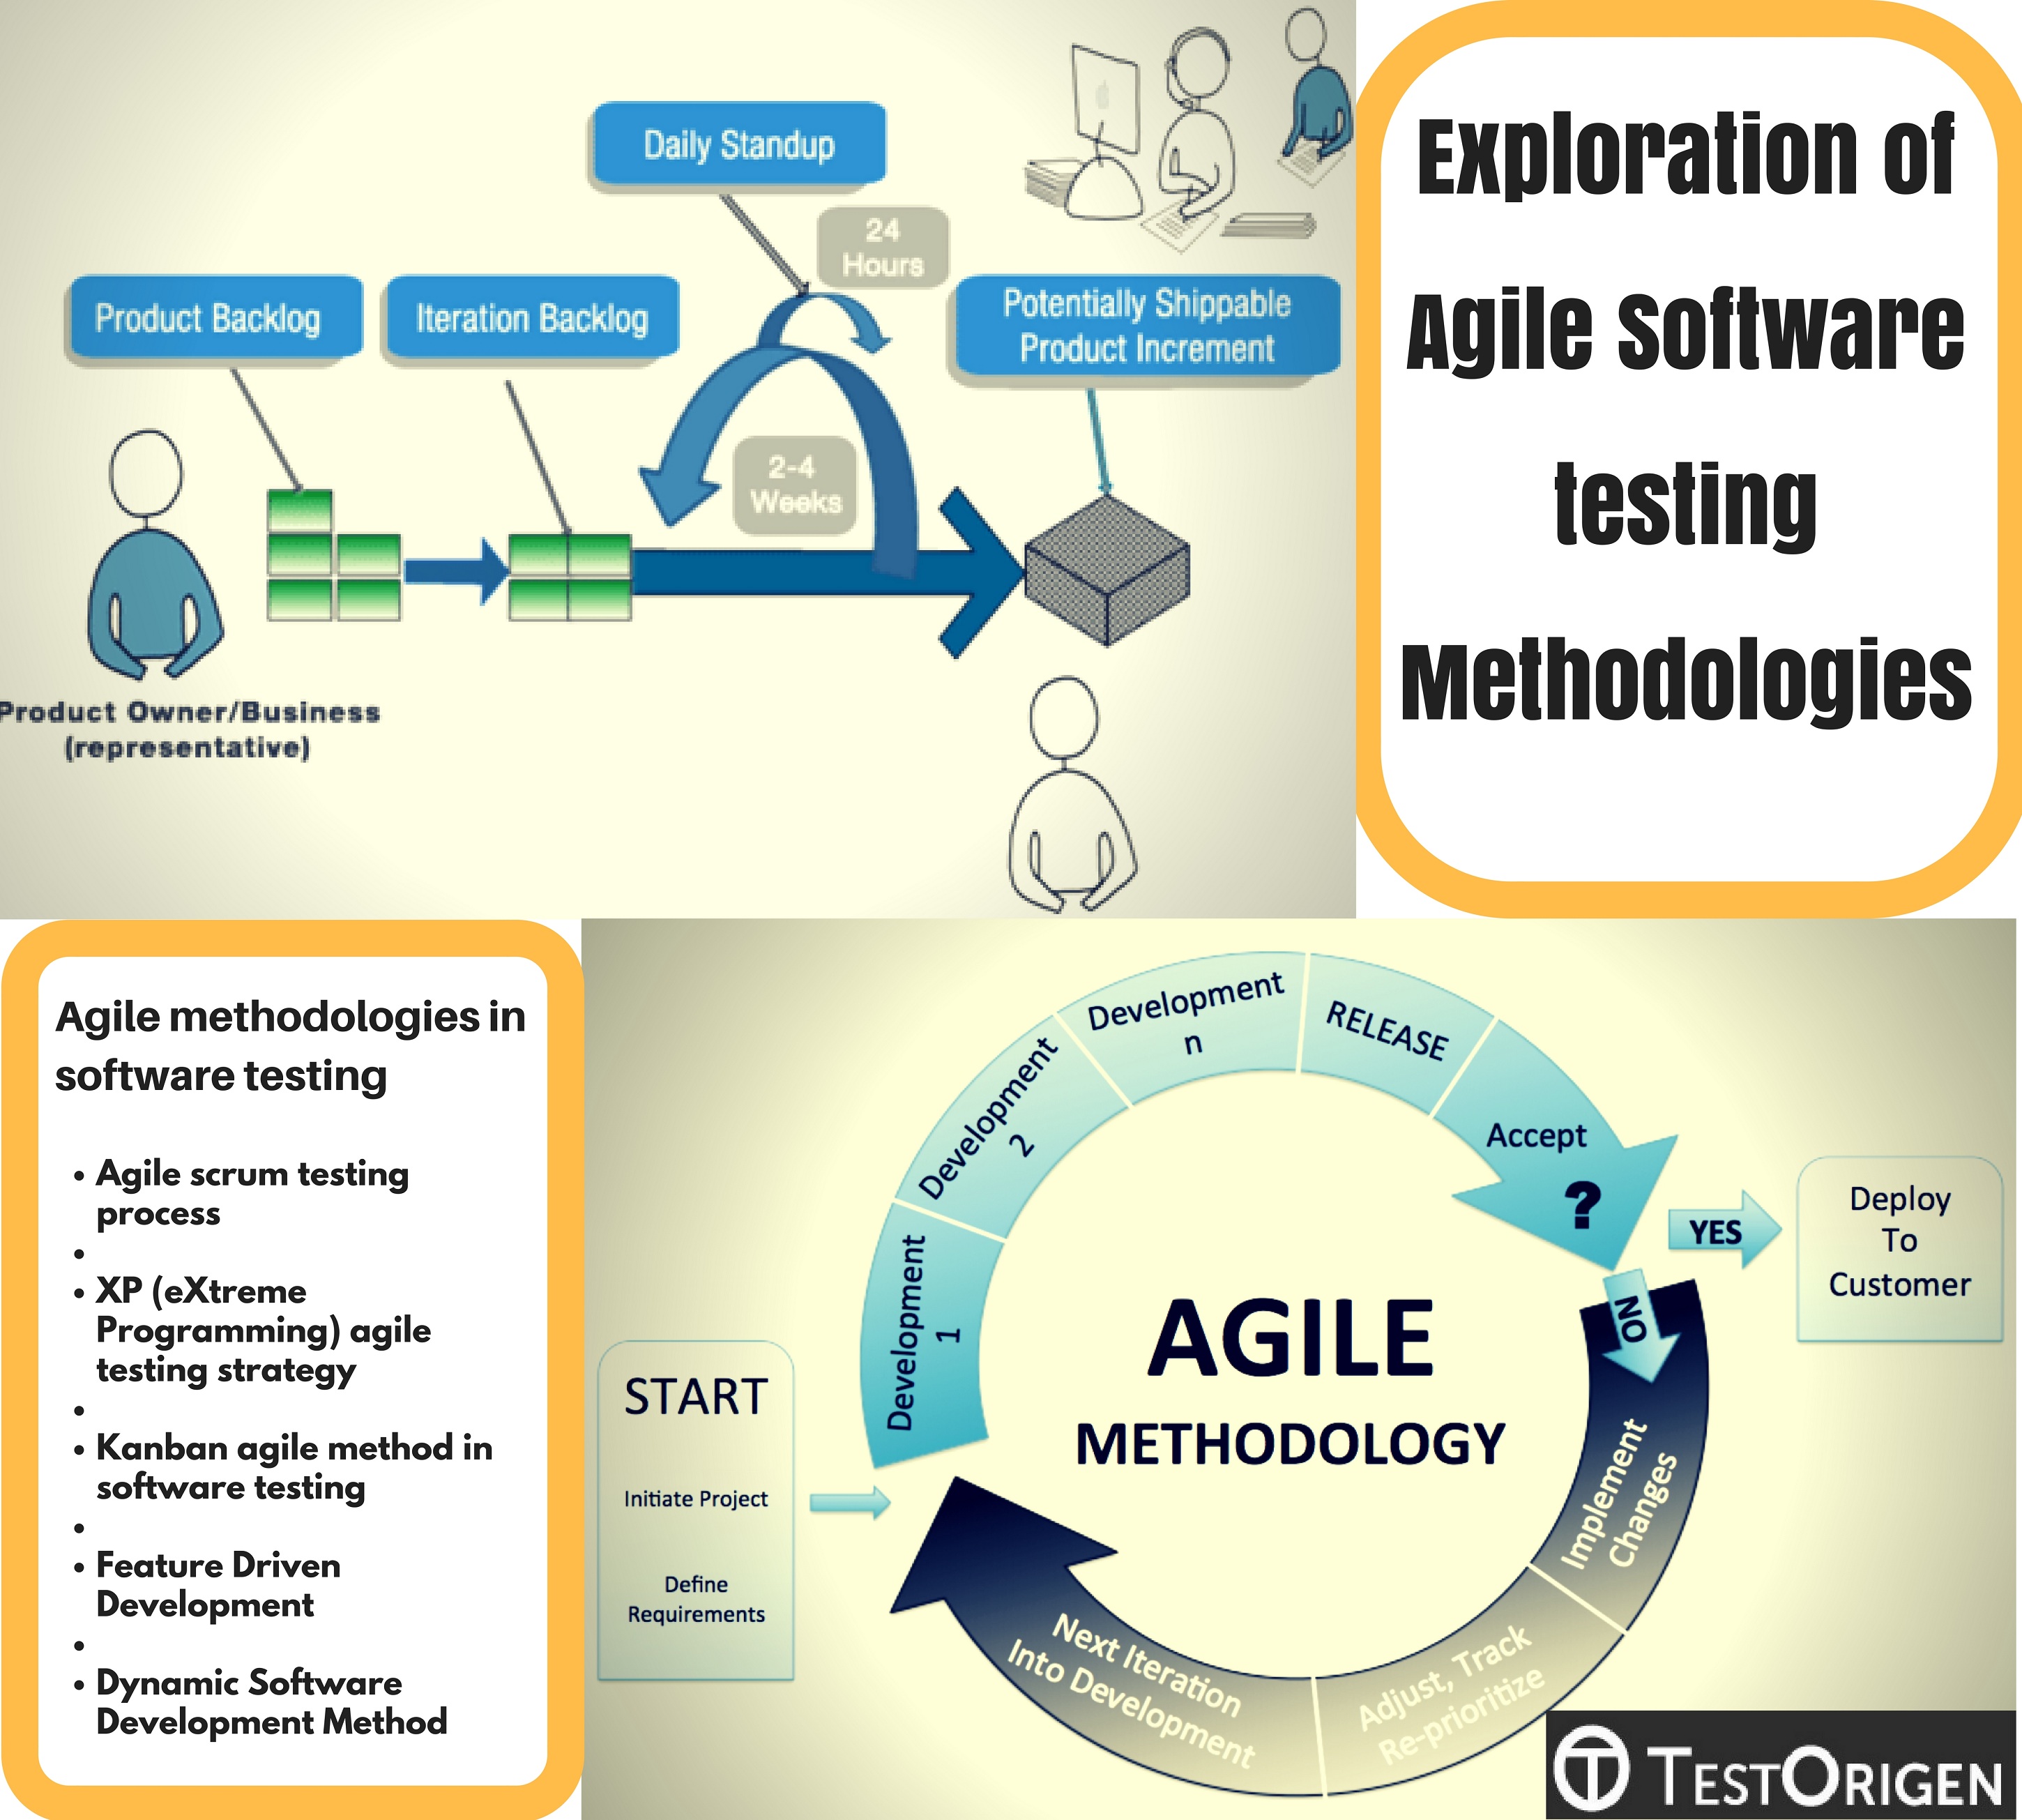 Exploration of Agile Software Testing Methodologies